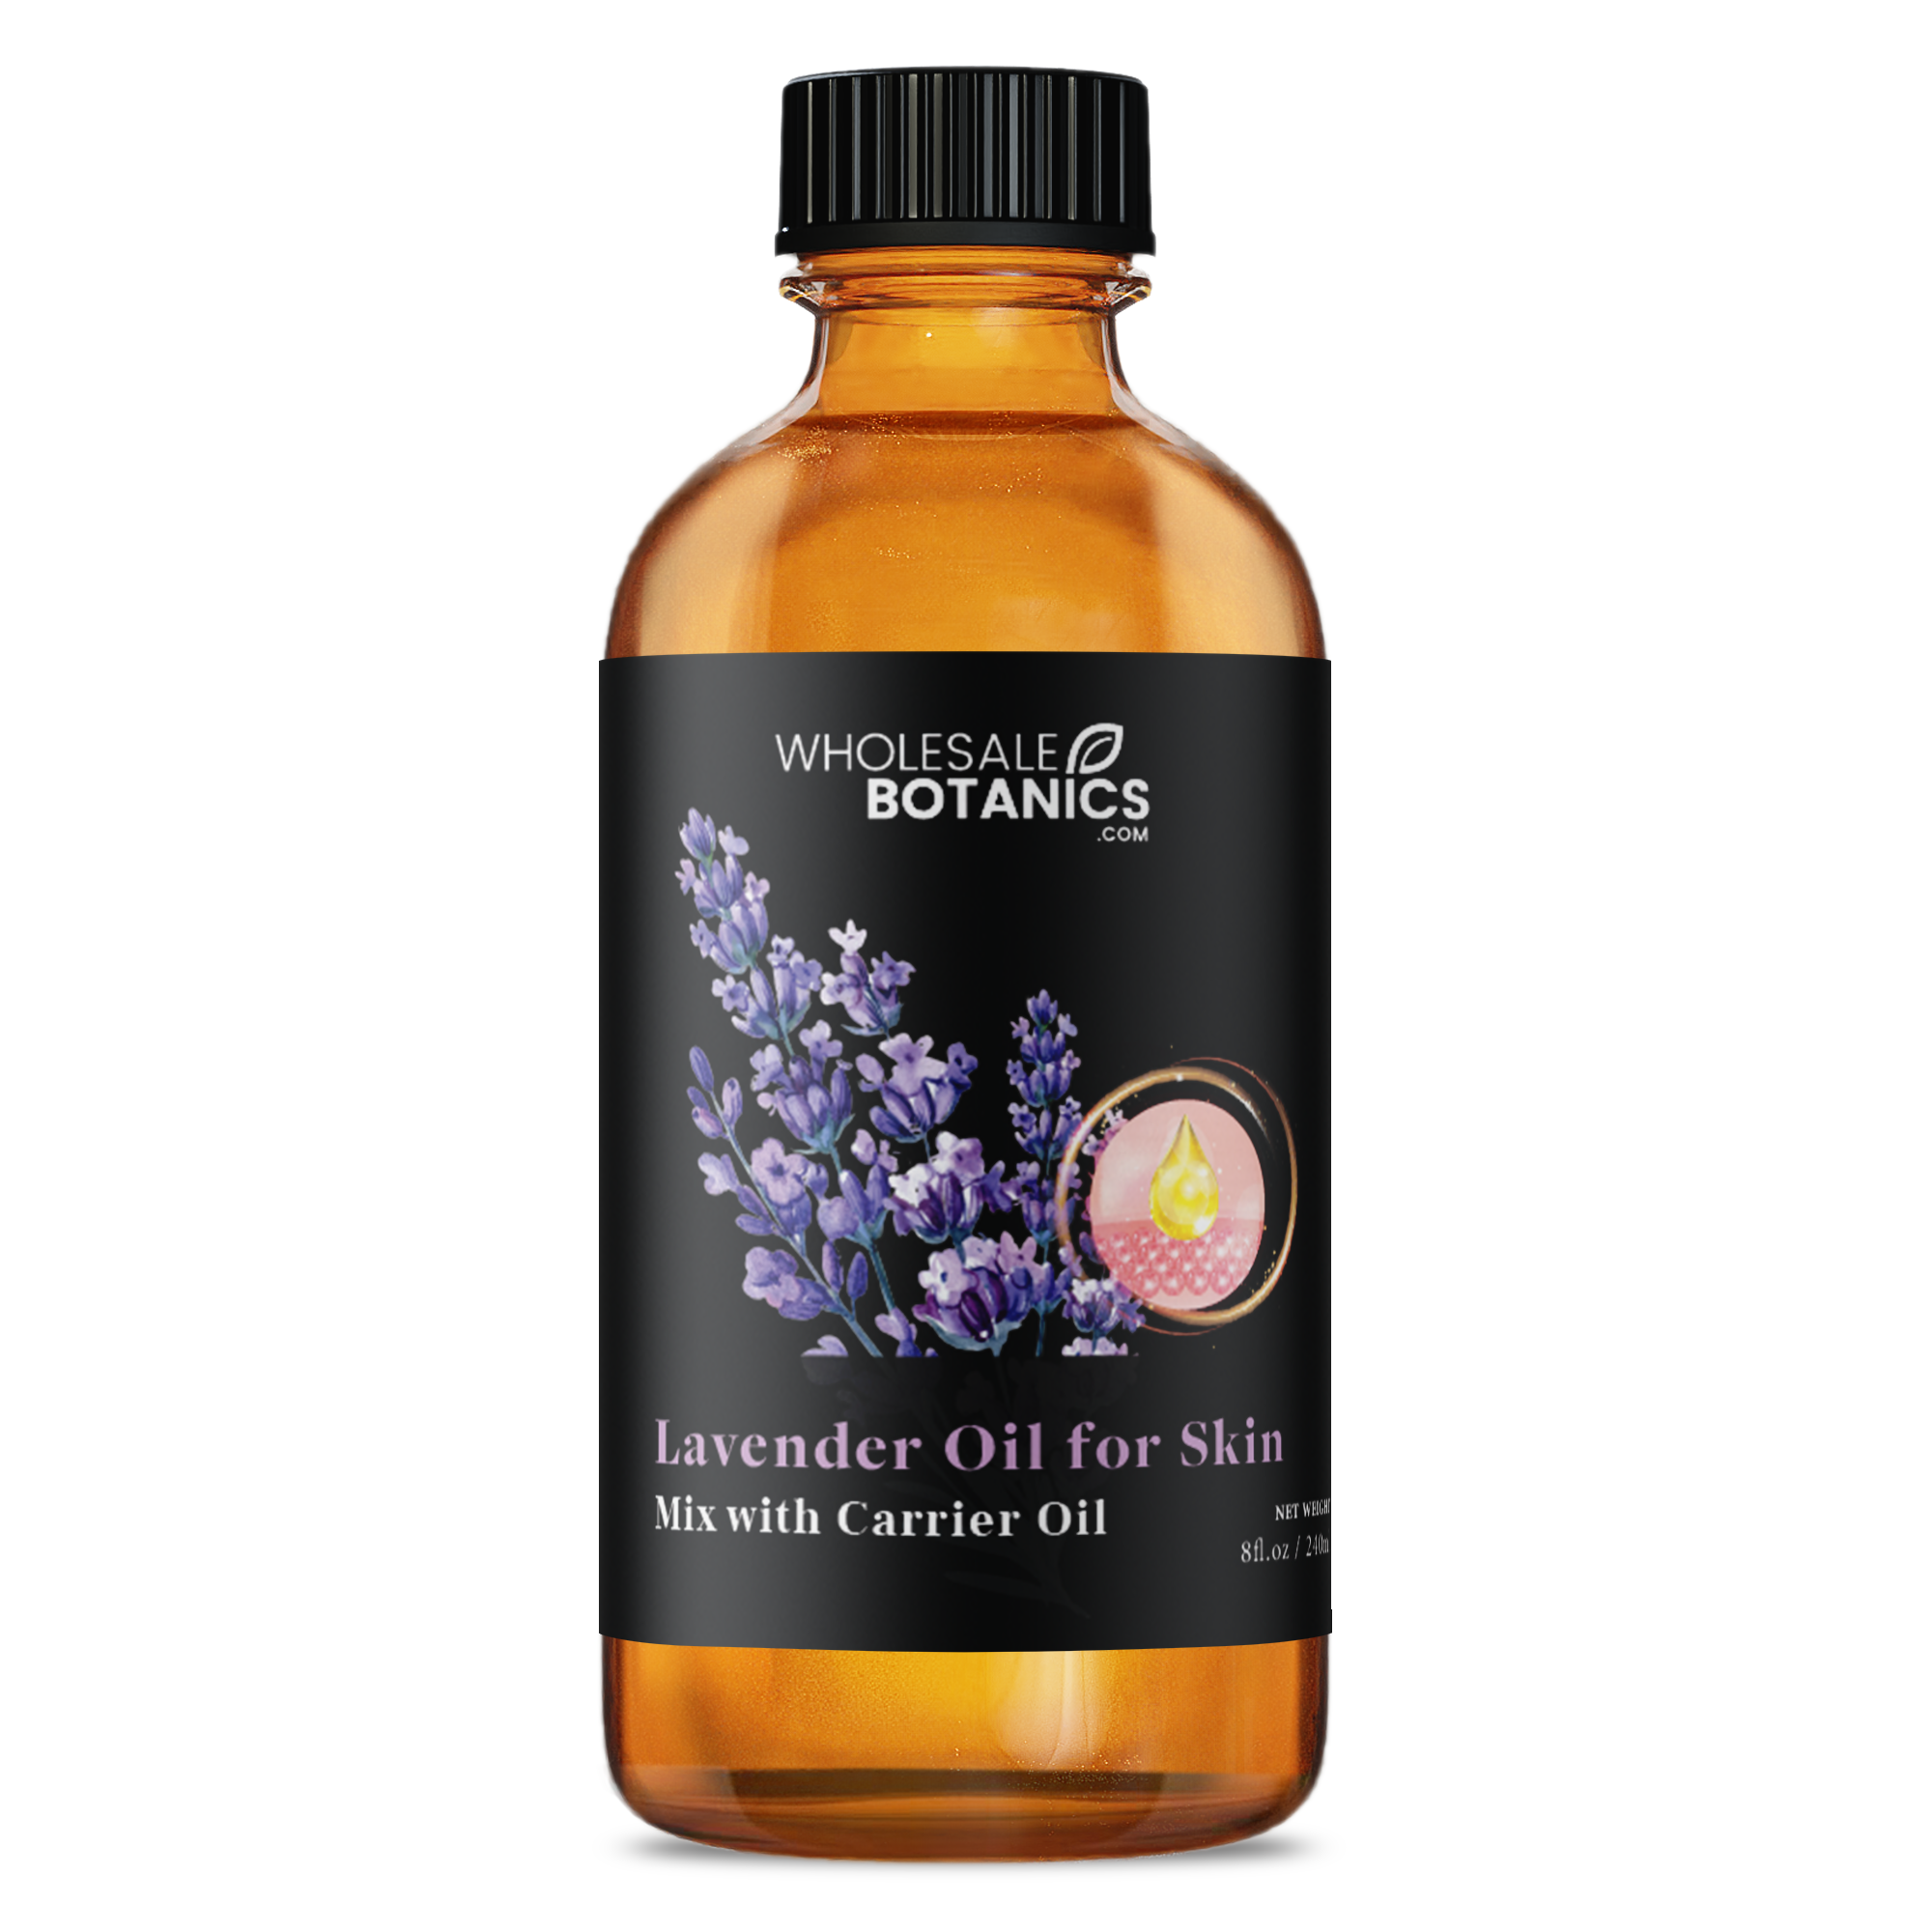 Lavender Oil for Skin